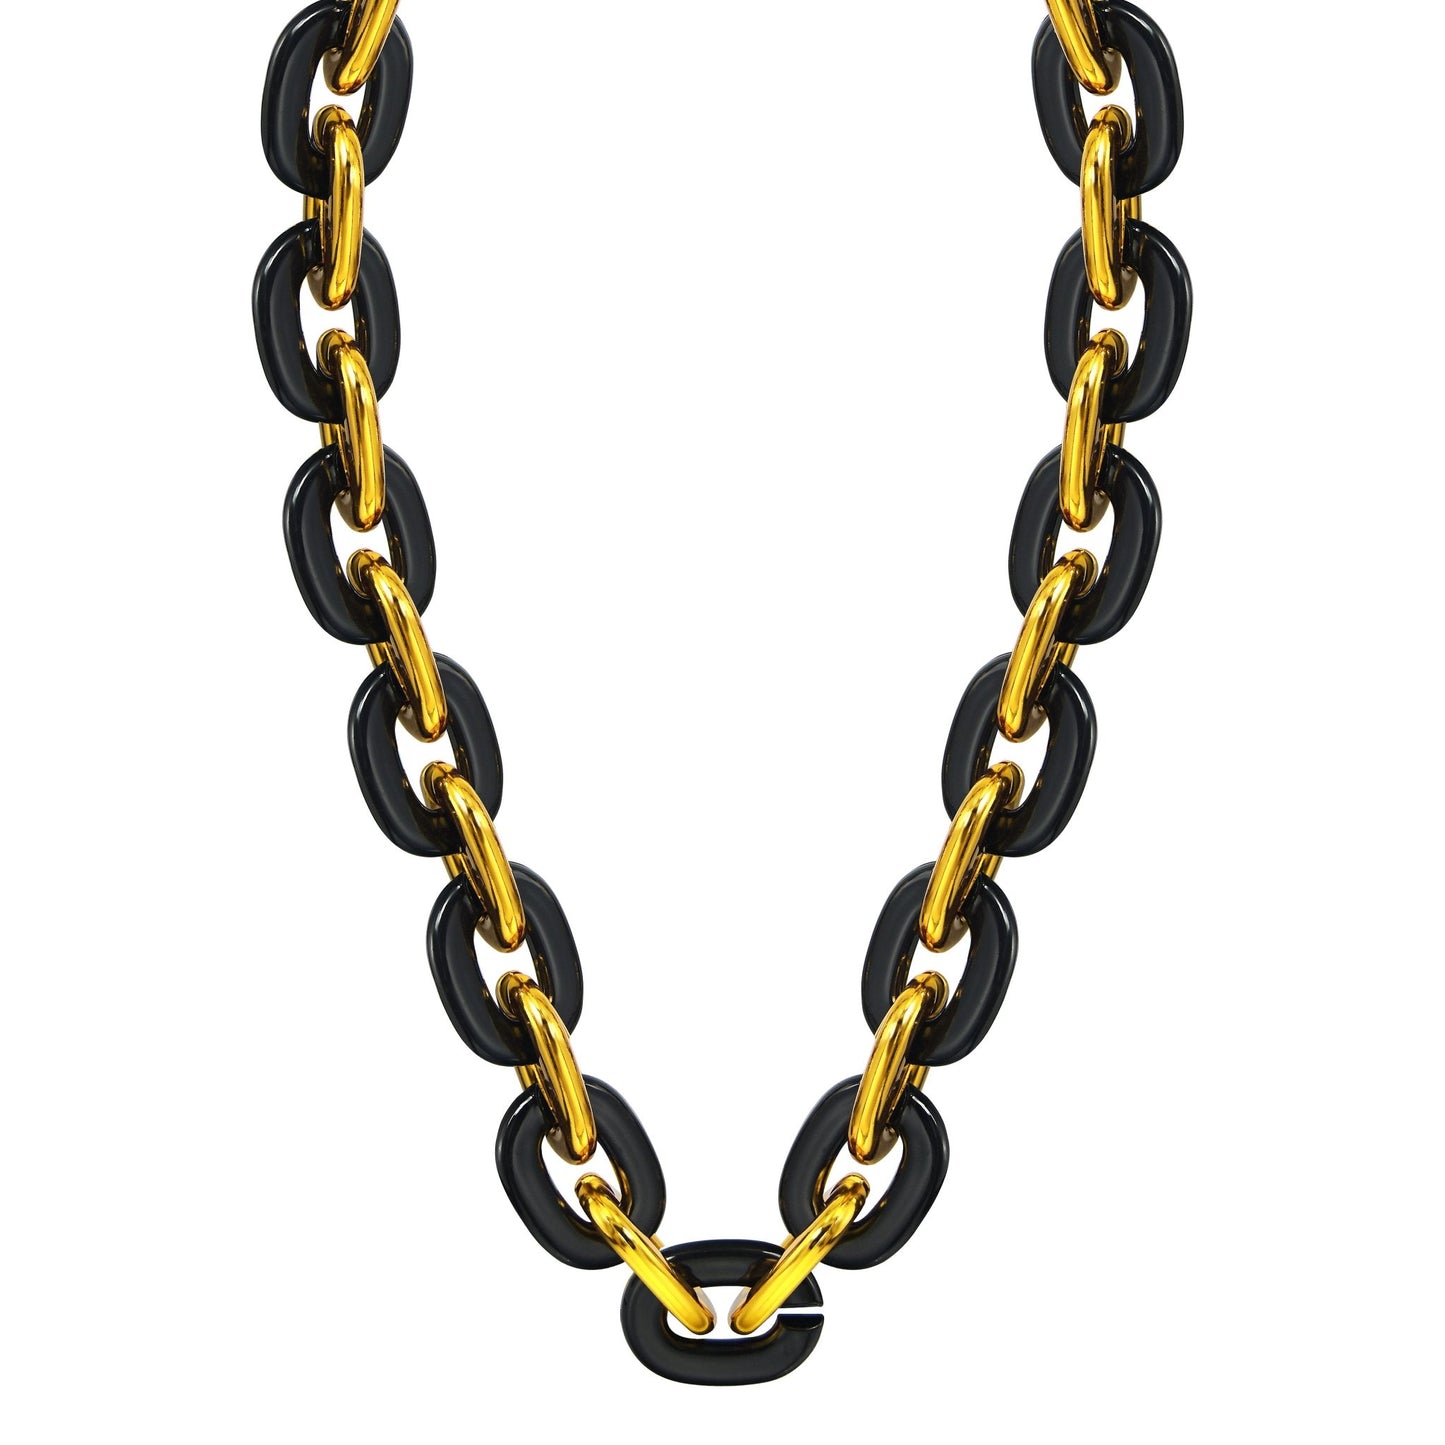 Jumbo Fan Chain Necklace - Gamedays Gear - Black / Gold